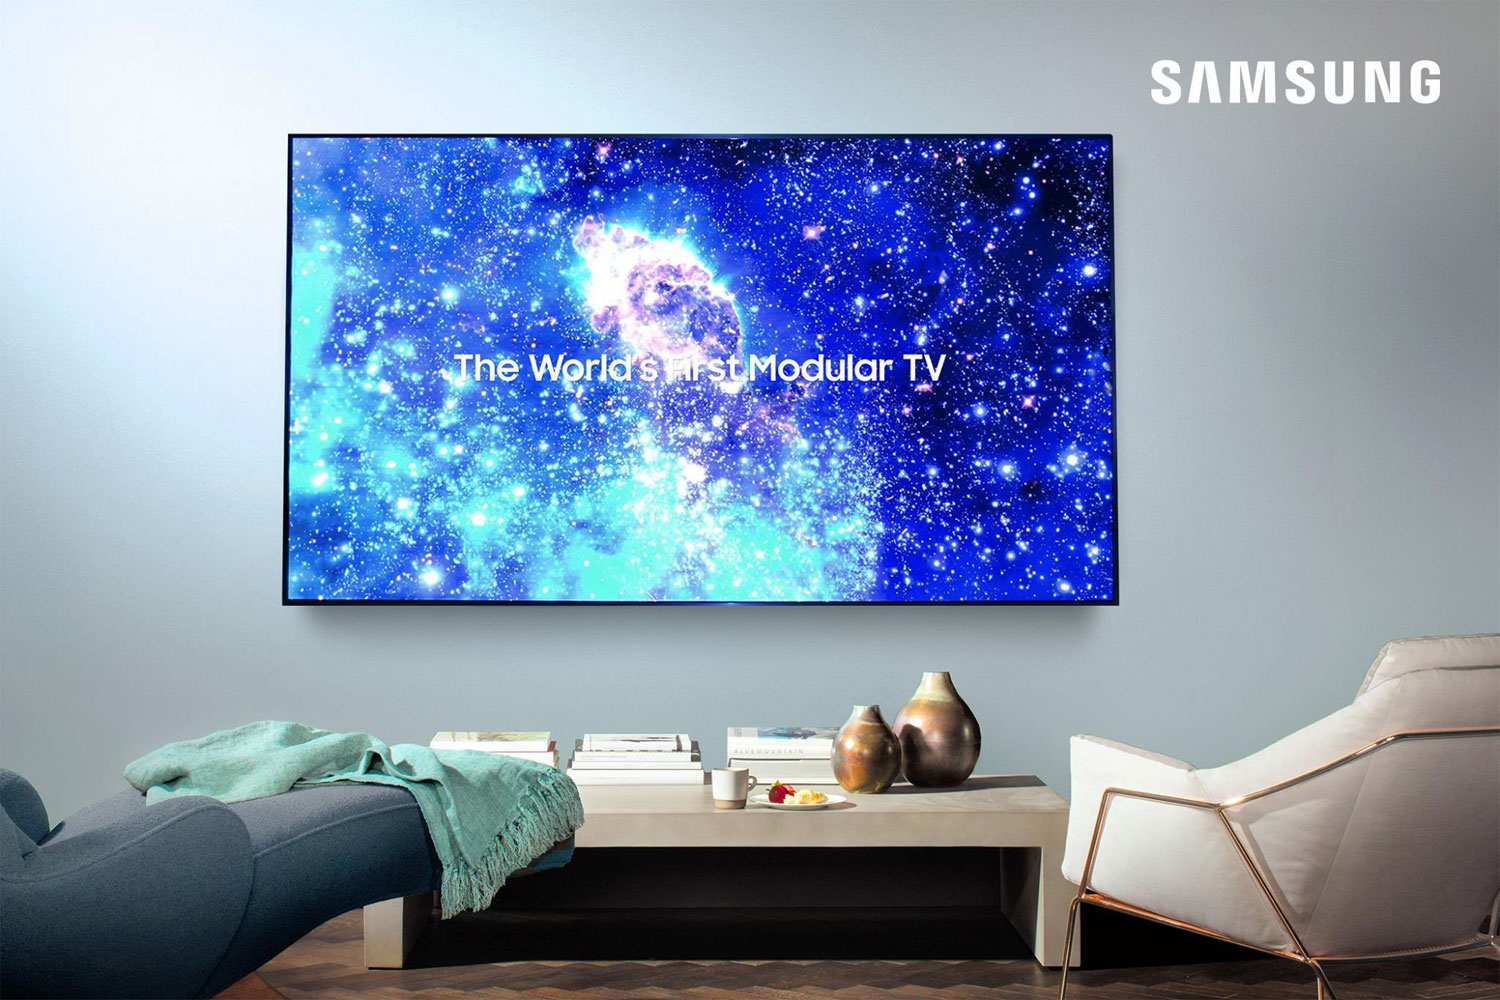 amplifikation Crack pot Algebraisk Samsung to launch 75" microLED TV next year - rumor - FlatpanelsHD